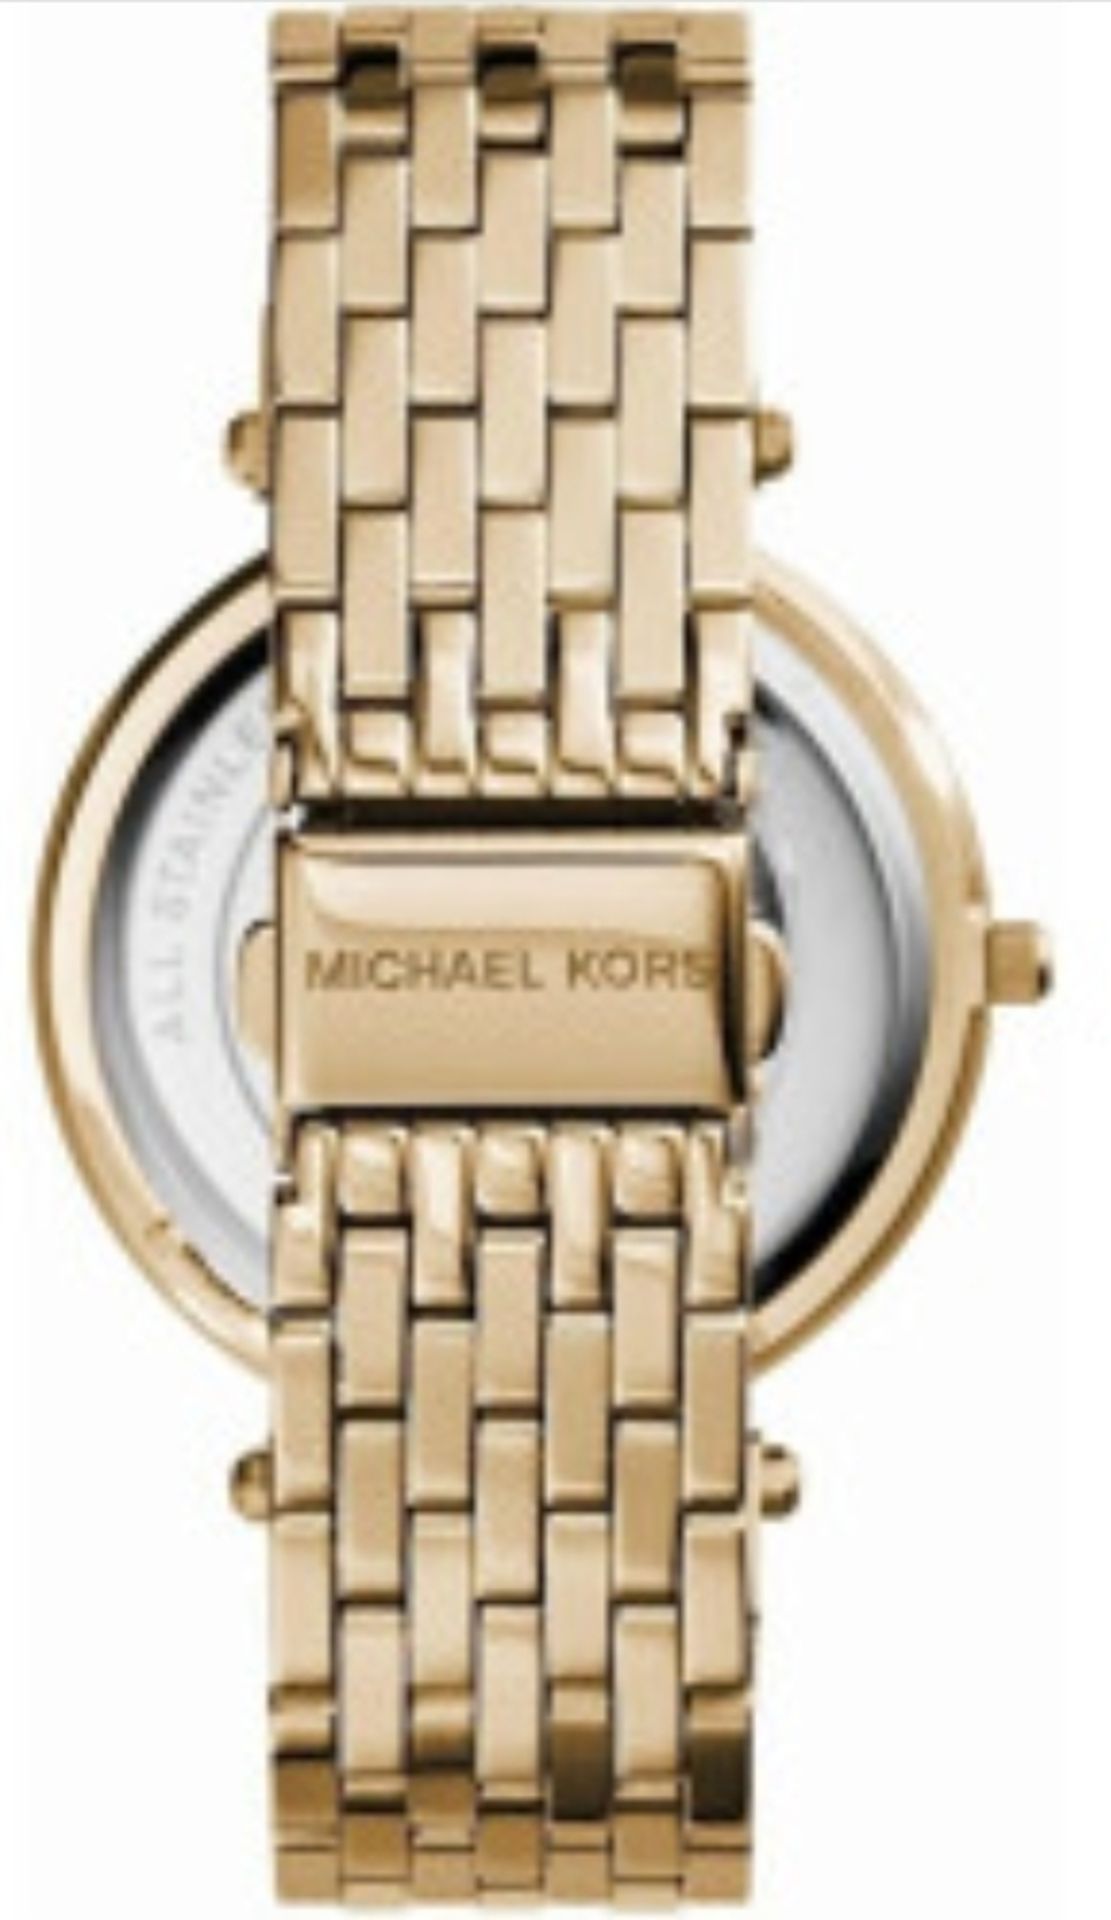 Michael Kors MK3191 Darci Gold Stainless Steel Ladies Watch - Image 5 of 6